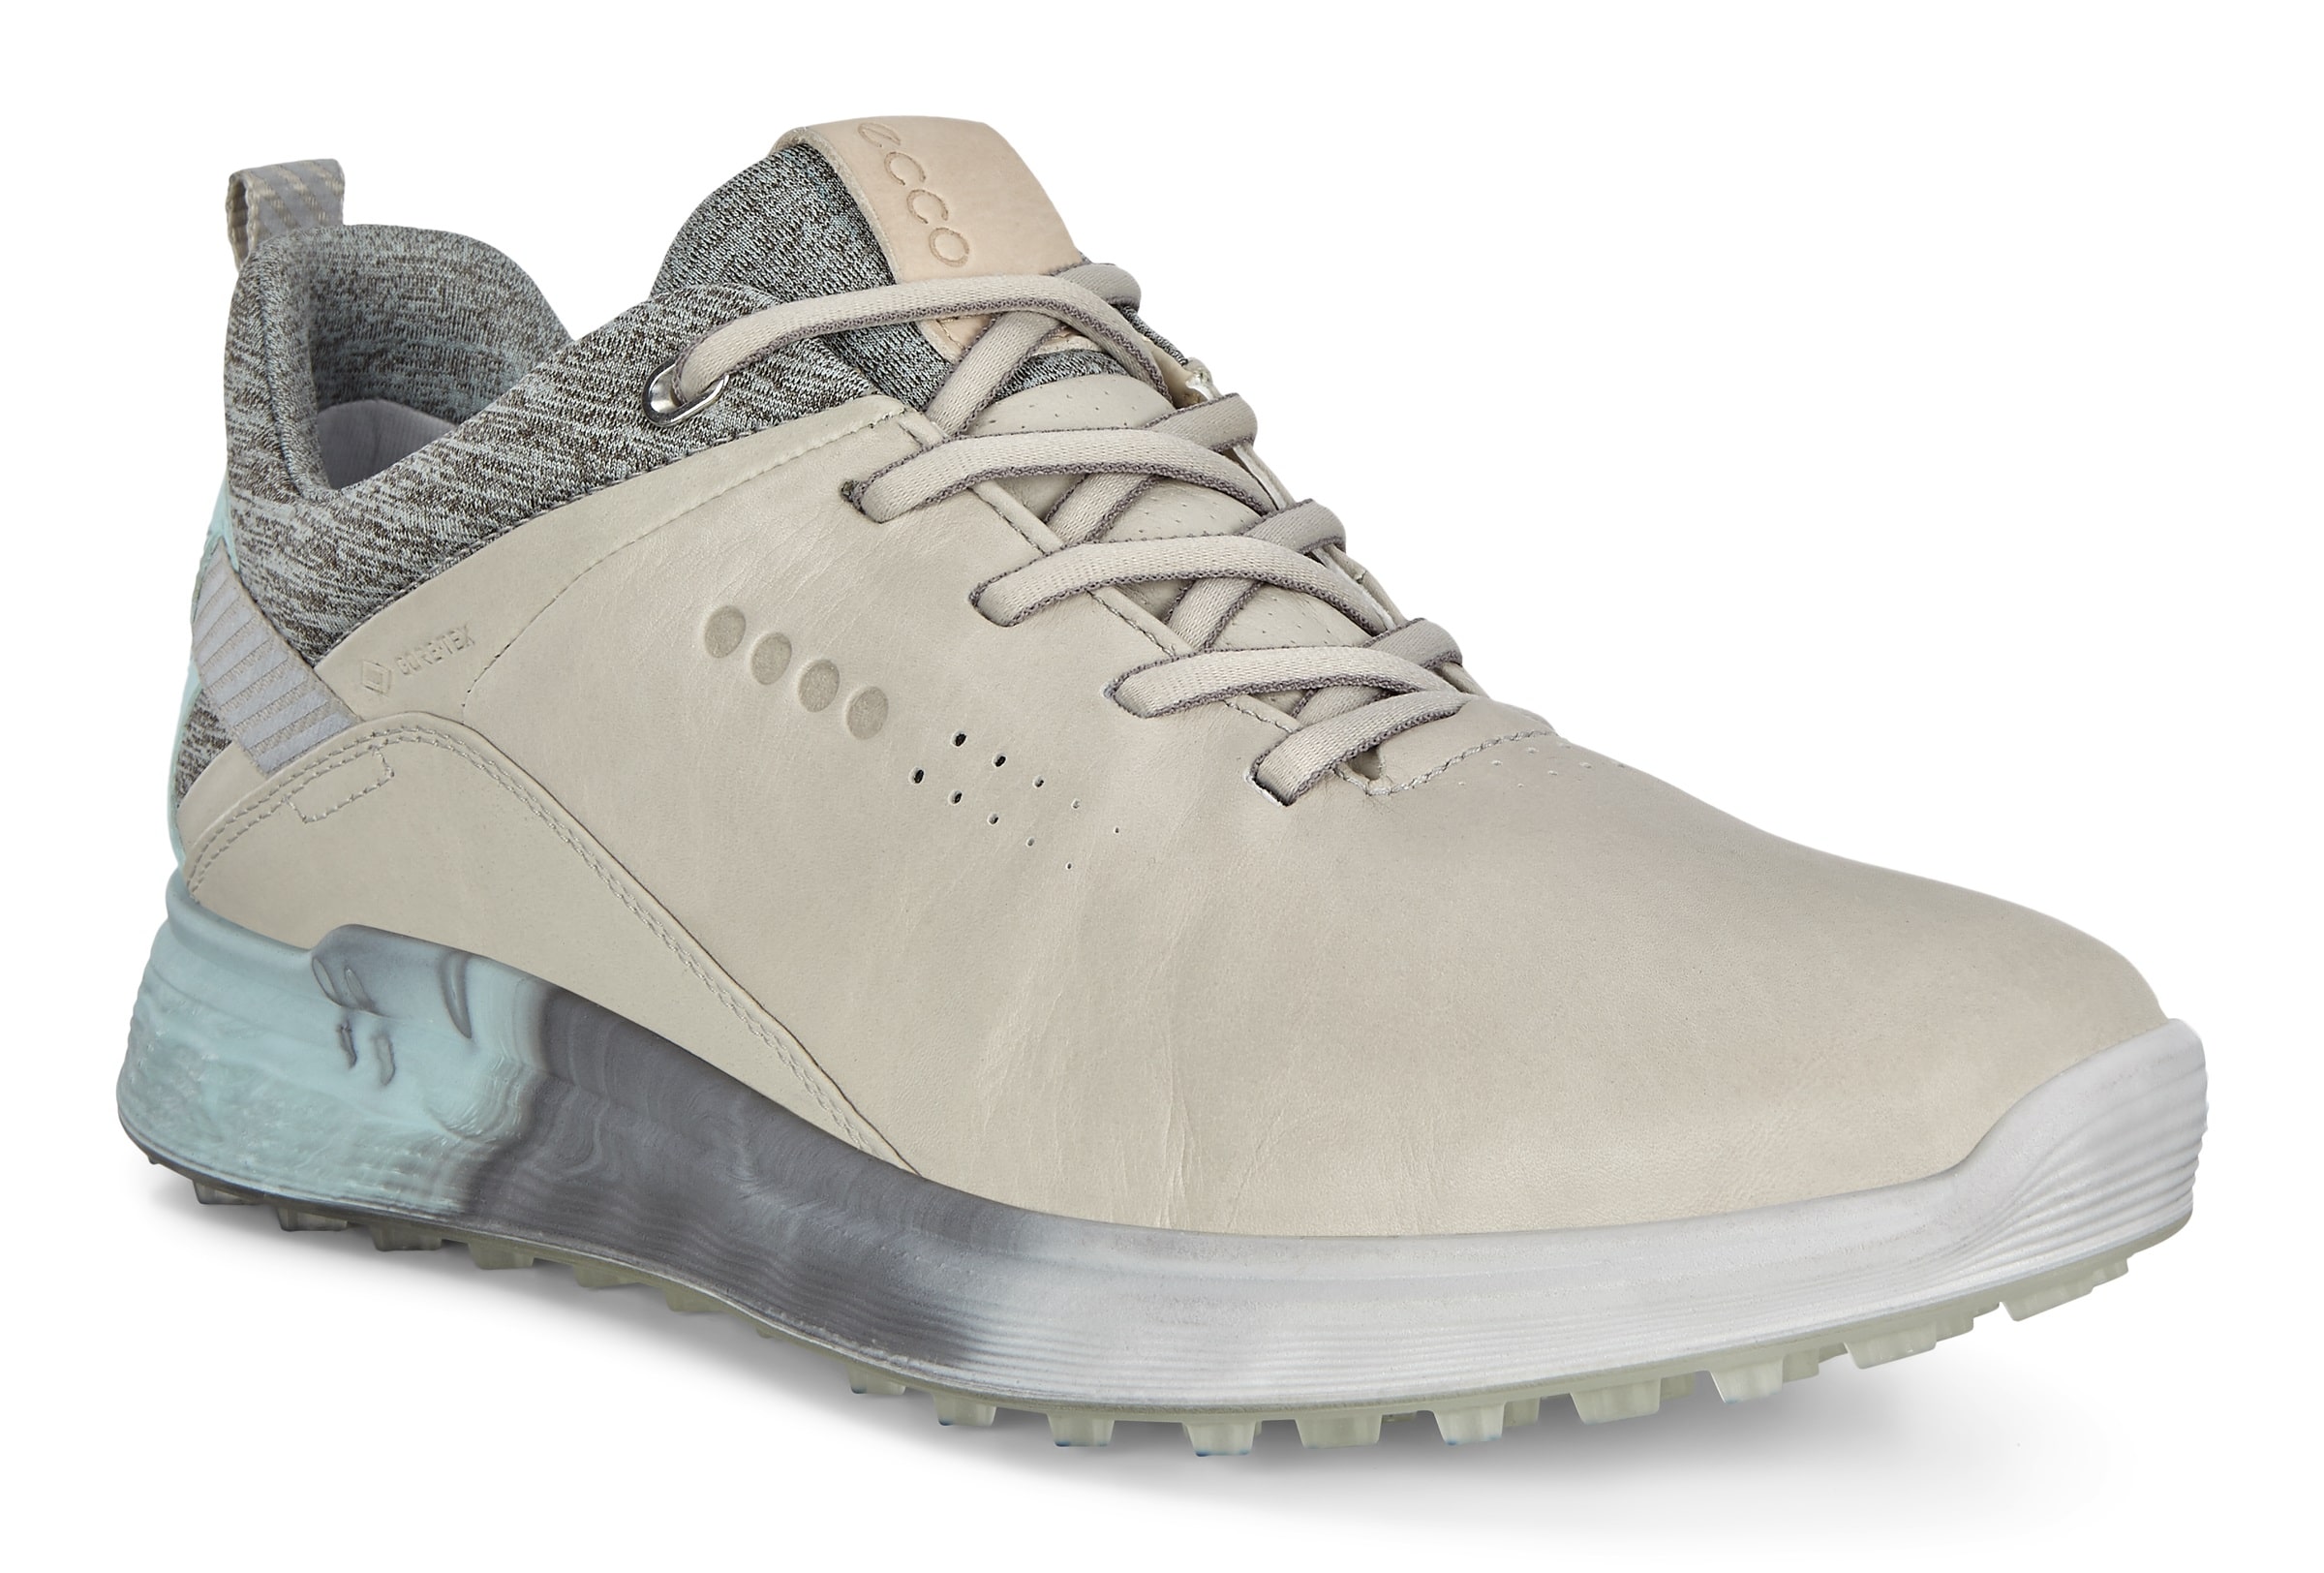 Ecco Announces New S-Three Hybrid Shoes - Golfalot